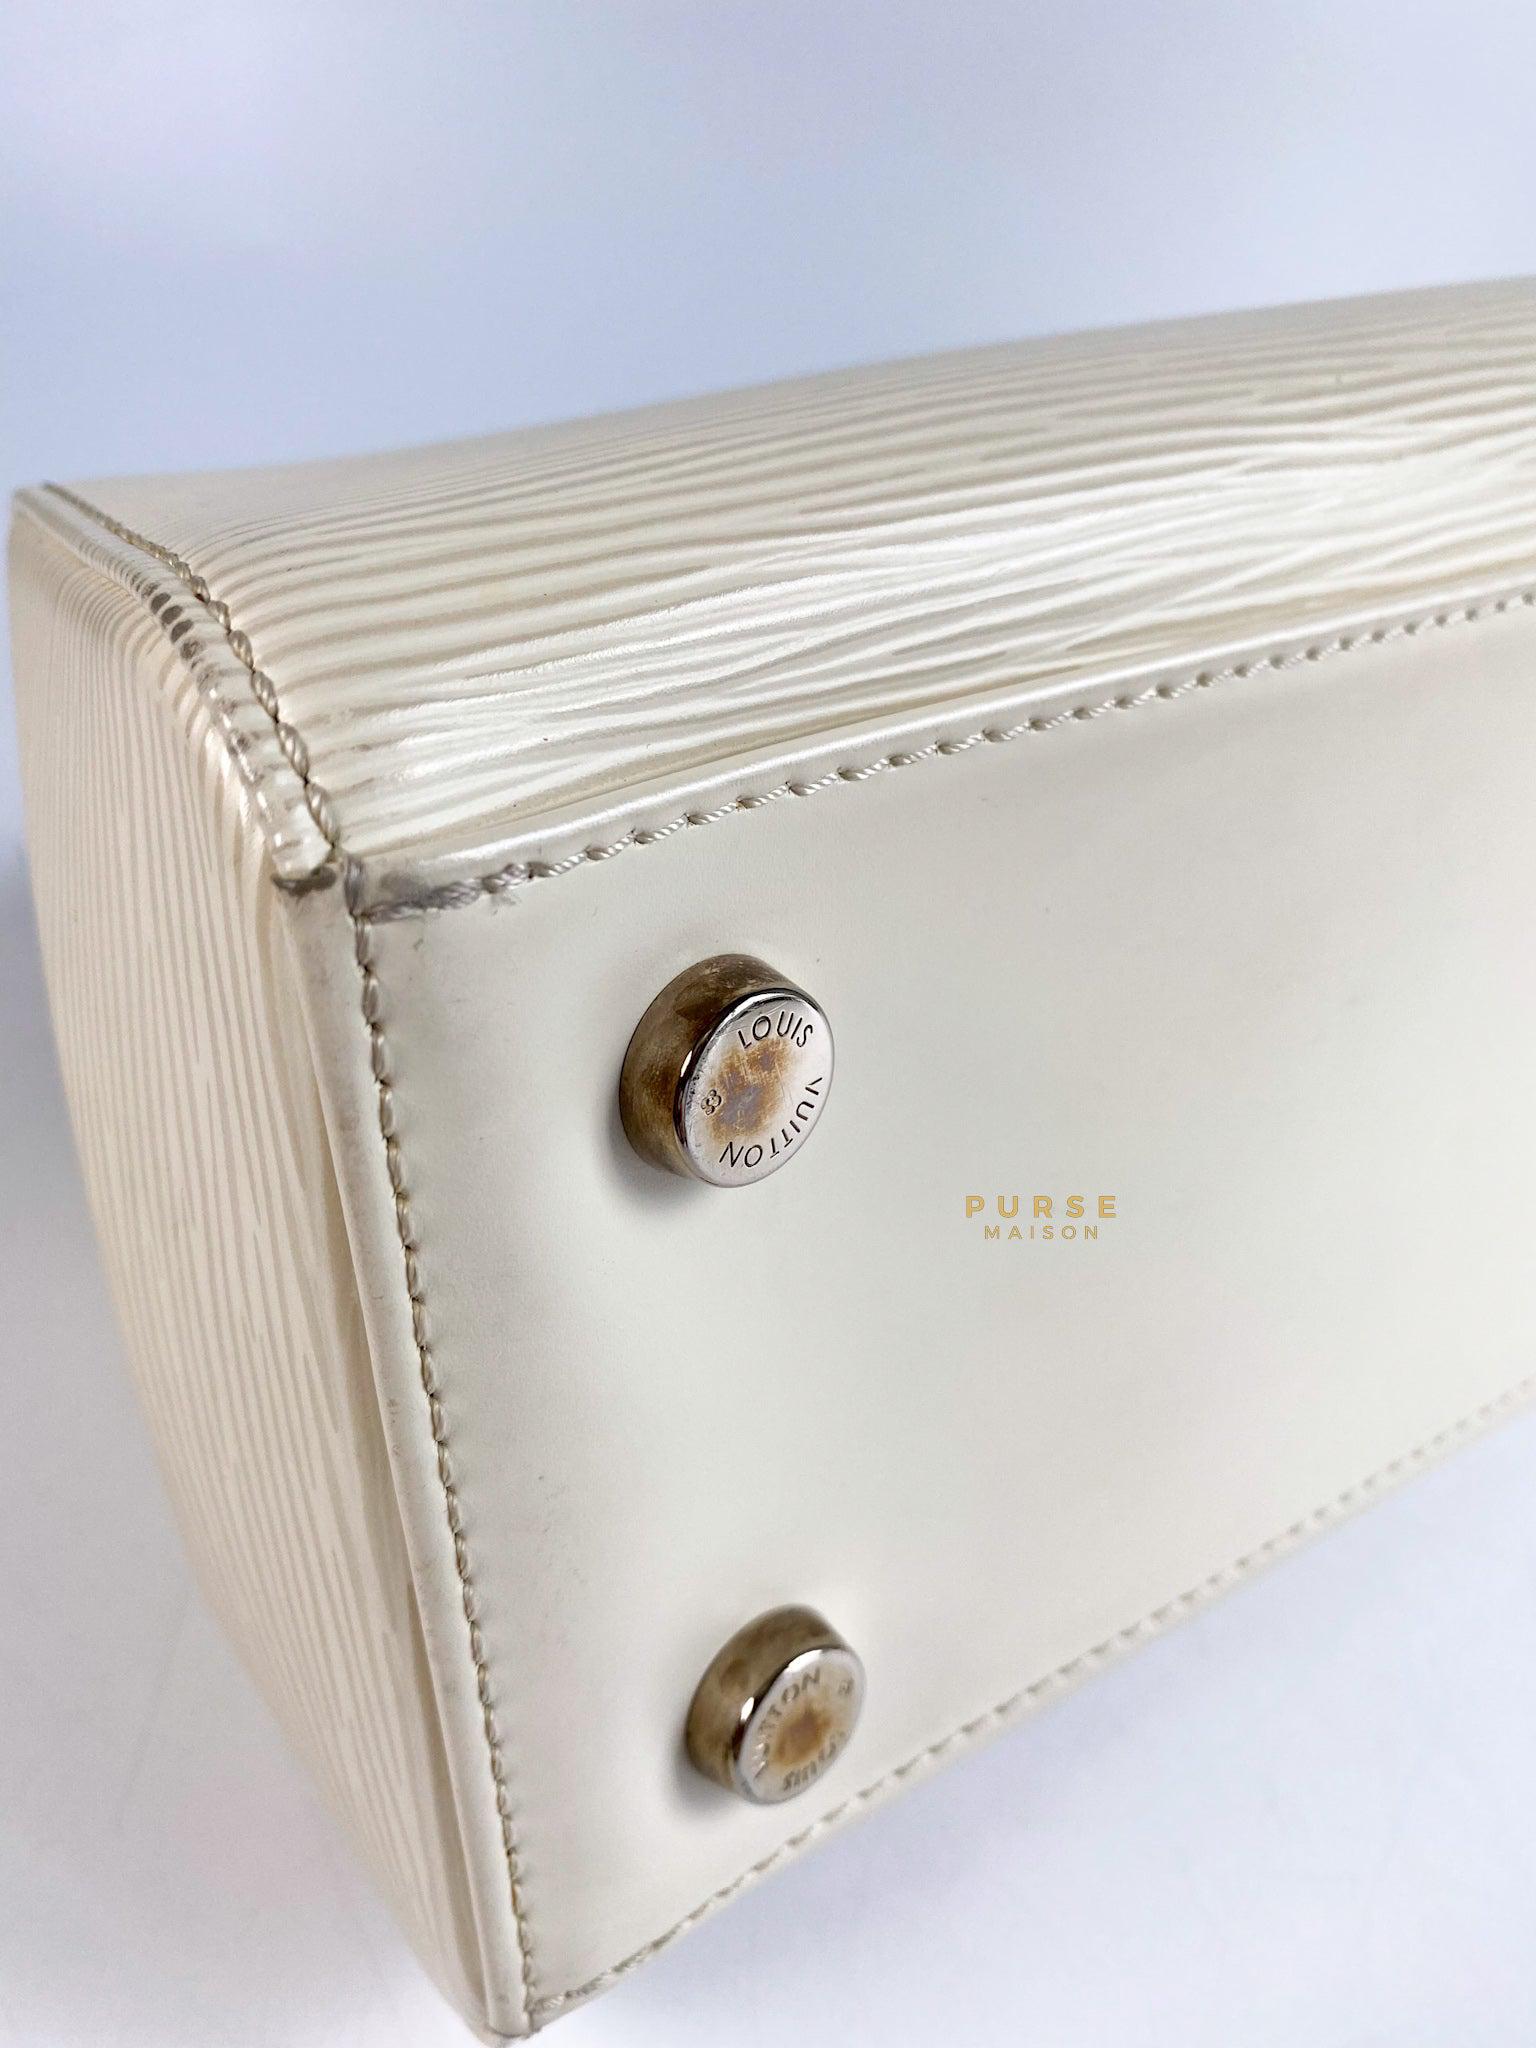 Louis Vuitton Brea MM White Epi Leather (Date Code: FL4100)